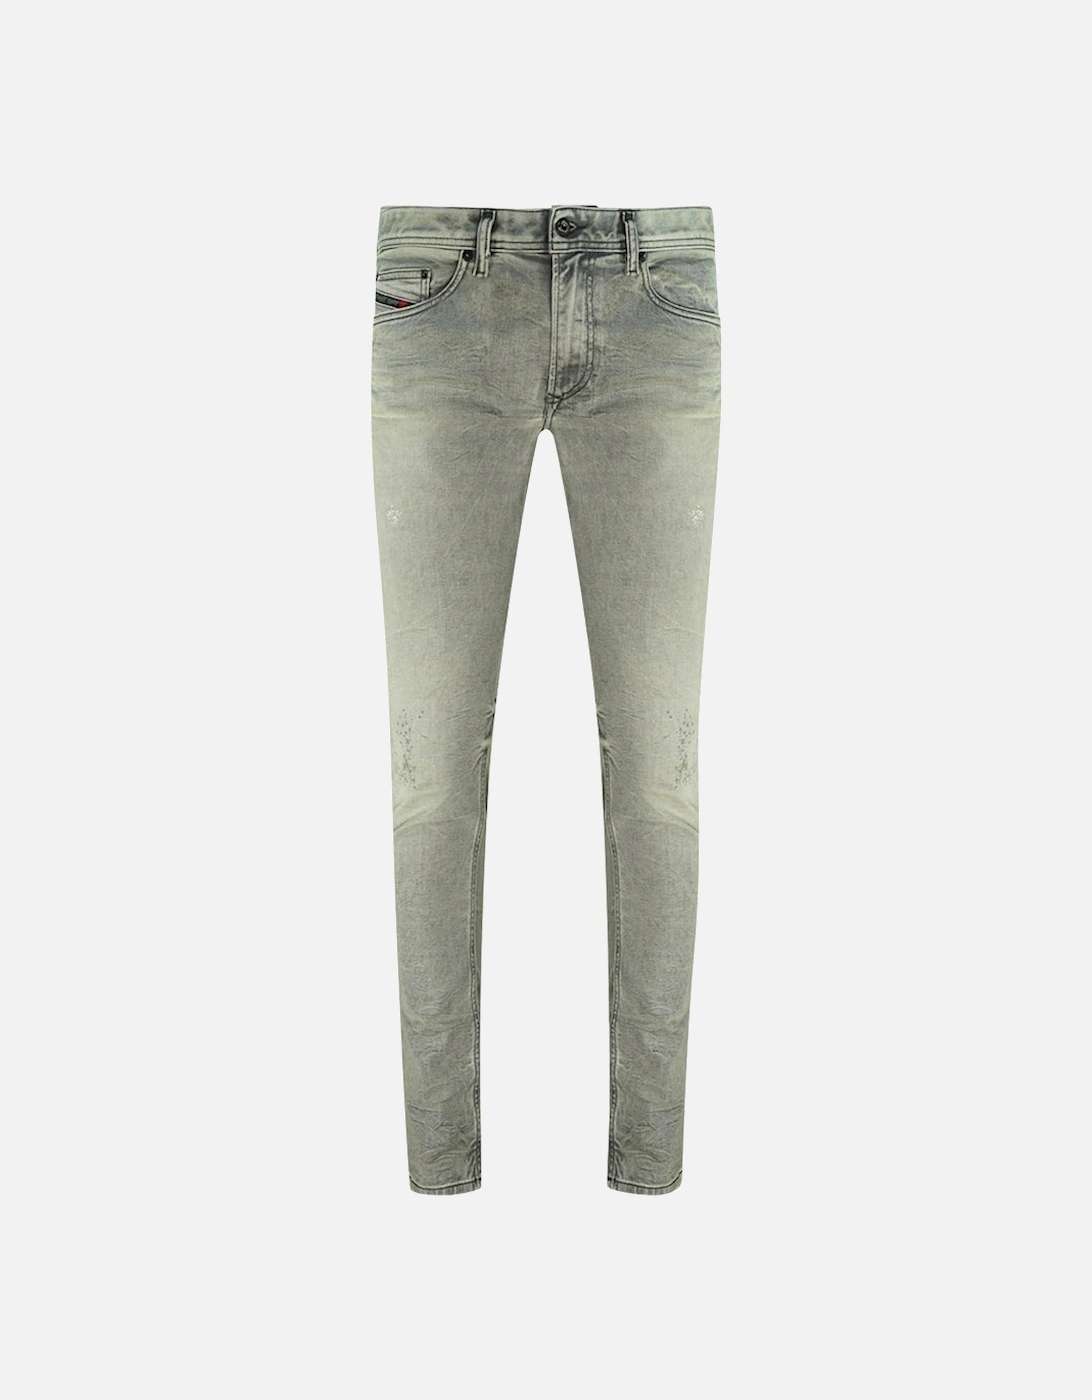 Thavar-XP R99J6 Jeans, 4 of 3